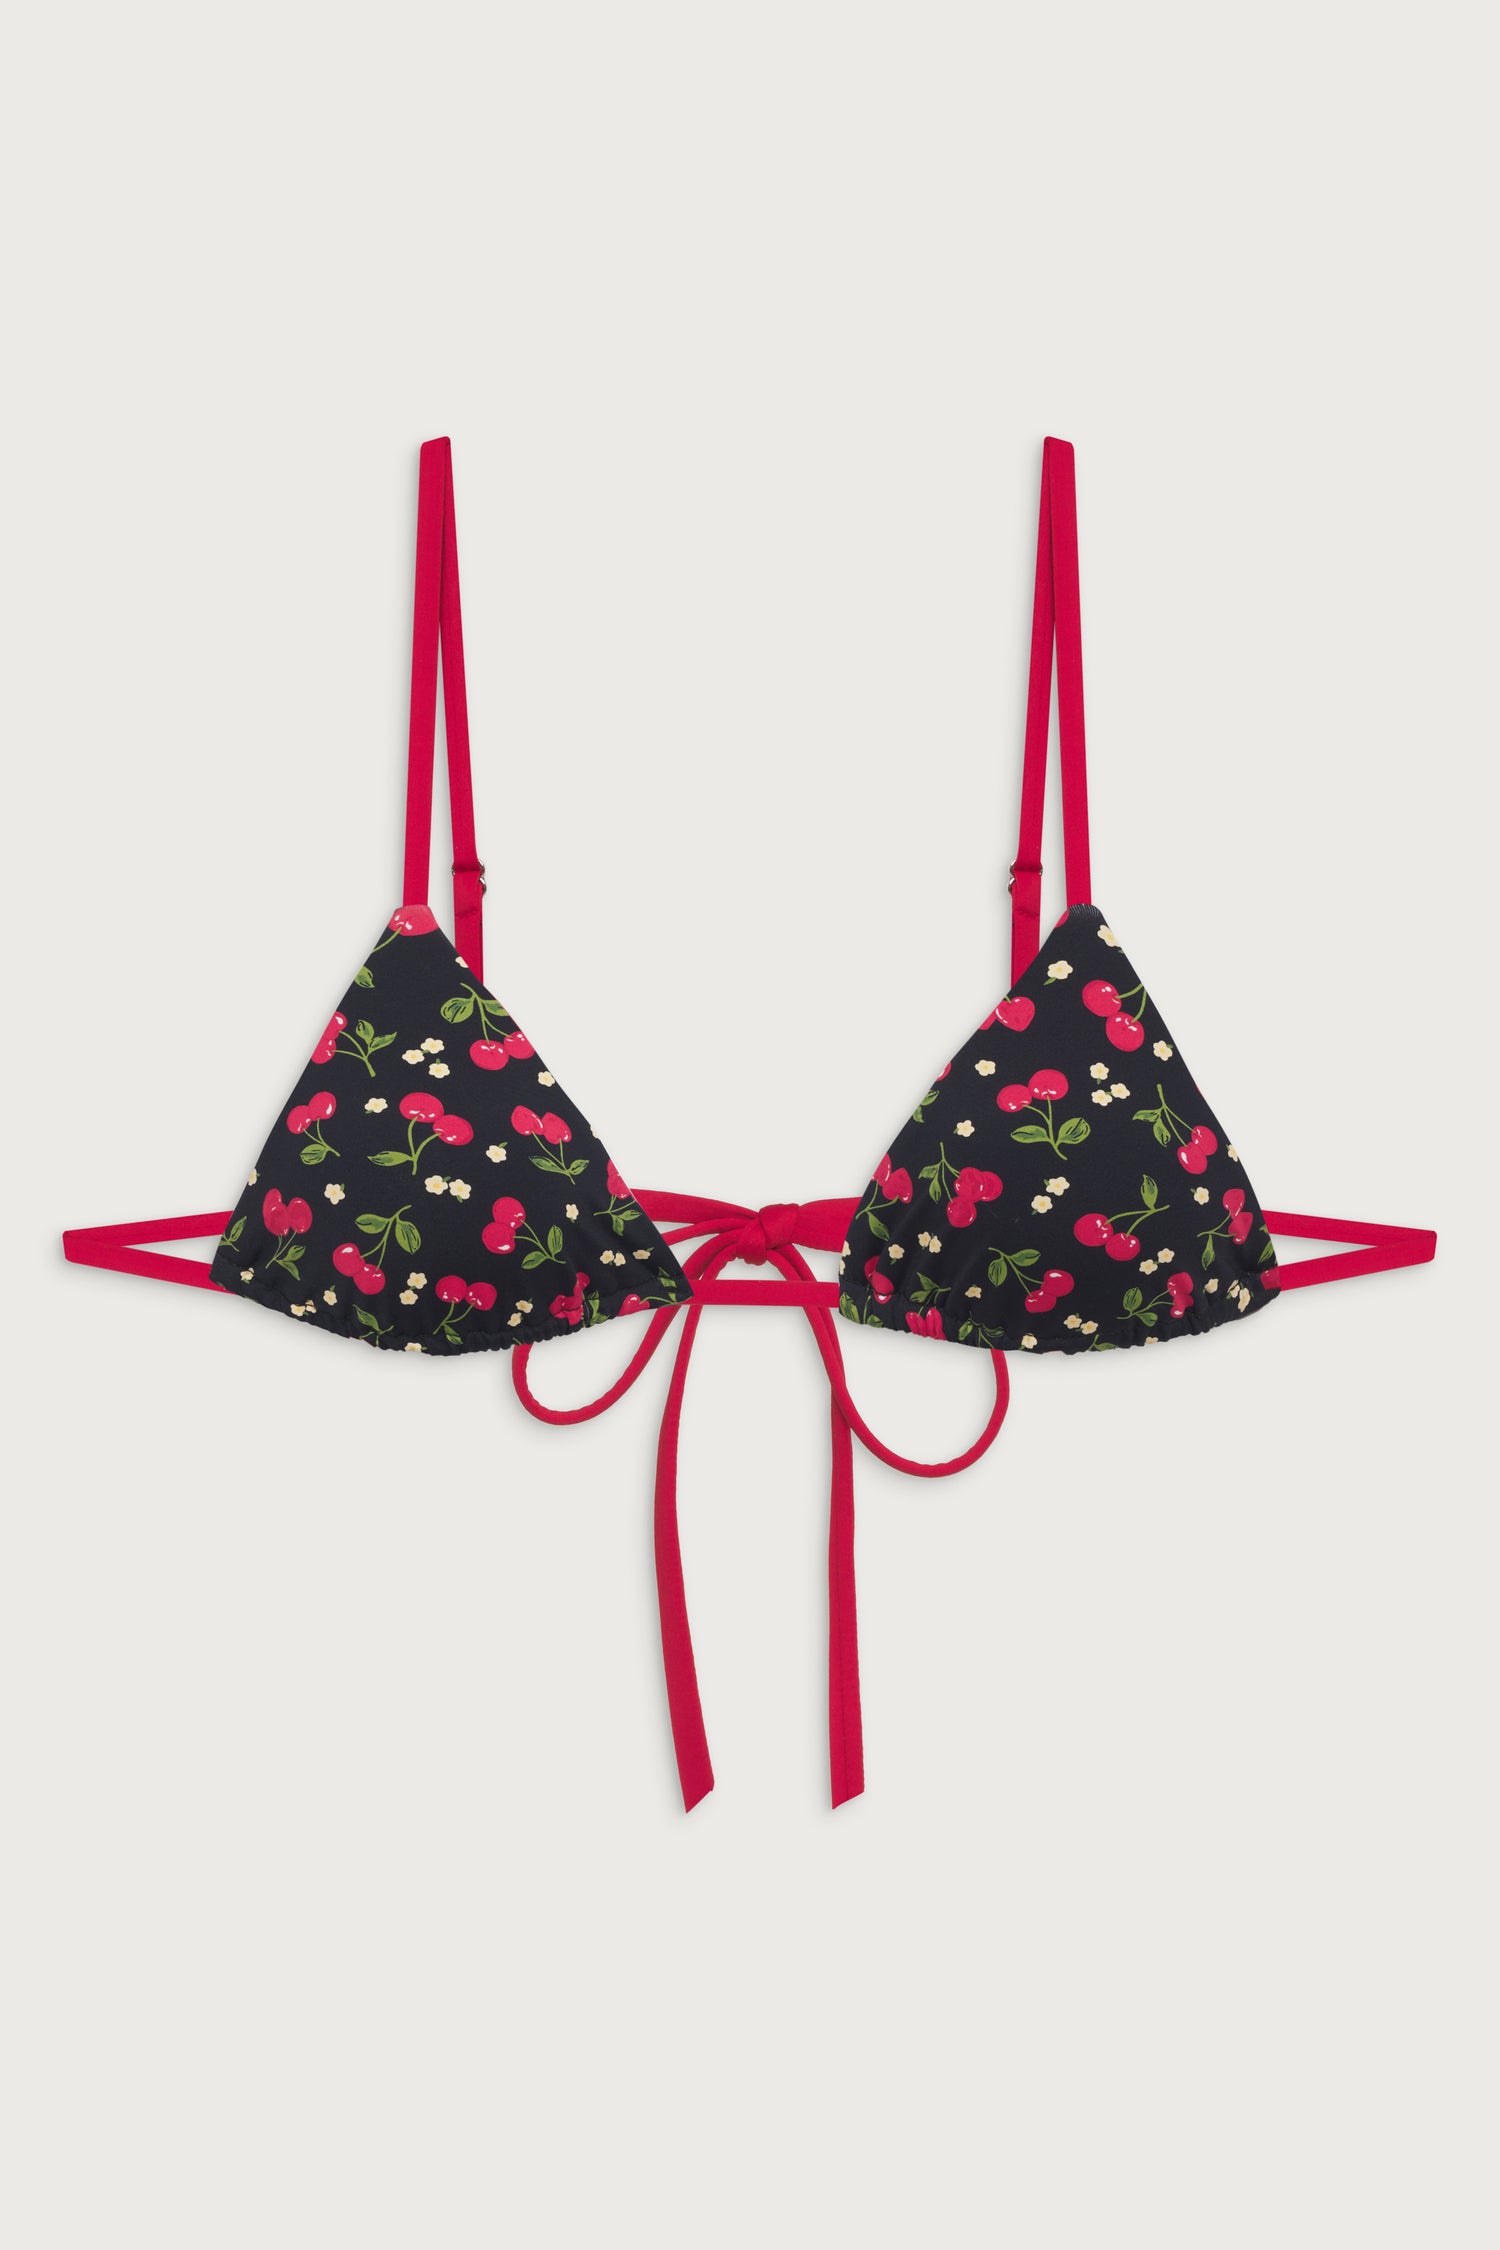 Strappy Black and Red Cherry Triangle Bikini Top